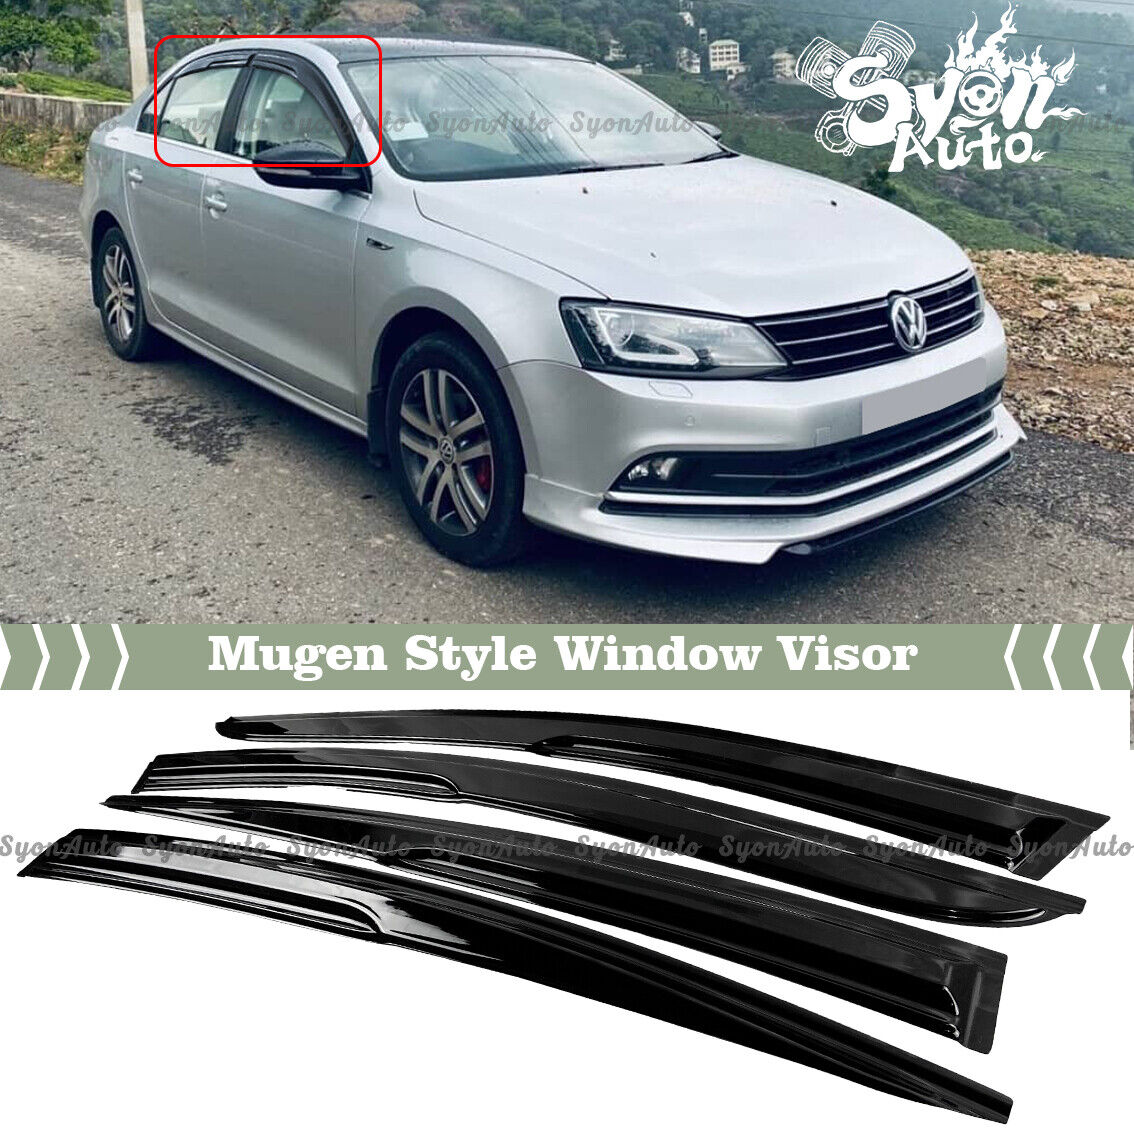 FITS 11-2017 VW JETTA MK6 3D WAVY MUGEN STYLE WINDOW VISOR RAIN GUARD DEFLECTOR